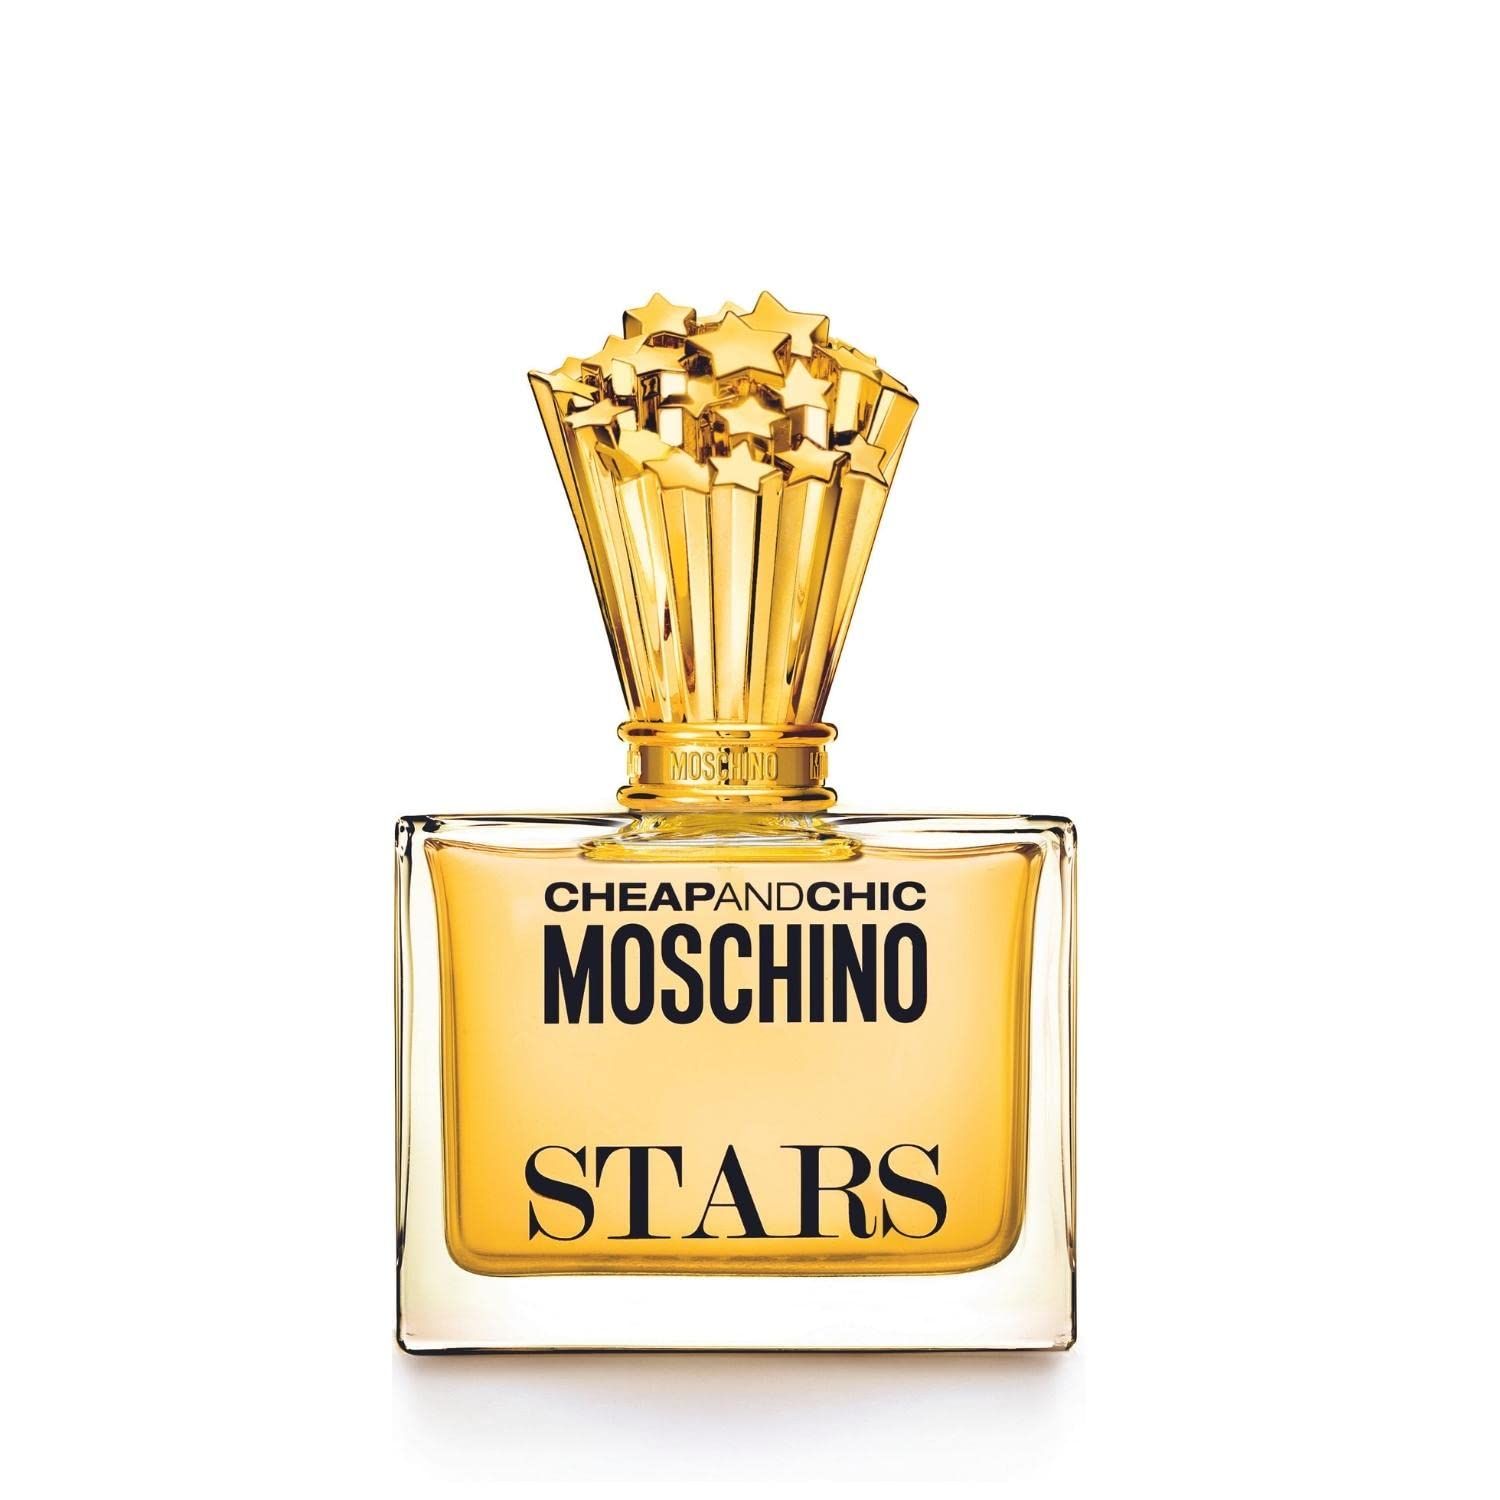 Moschino парфюмерная вода цена. Moschino Stars 50ml. Москино духи. Москино духи женские. Moschino cheap and Chic.